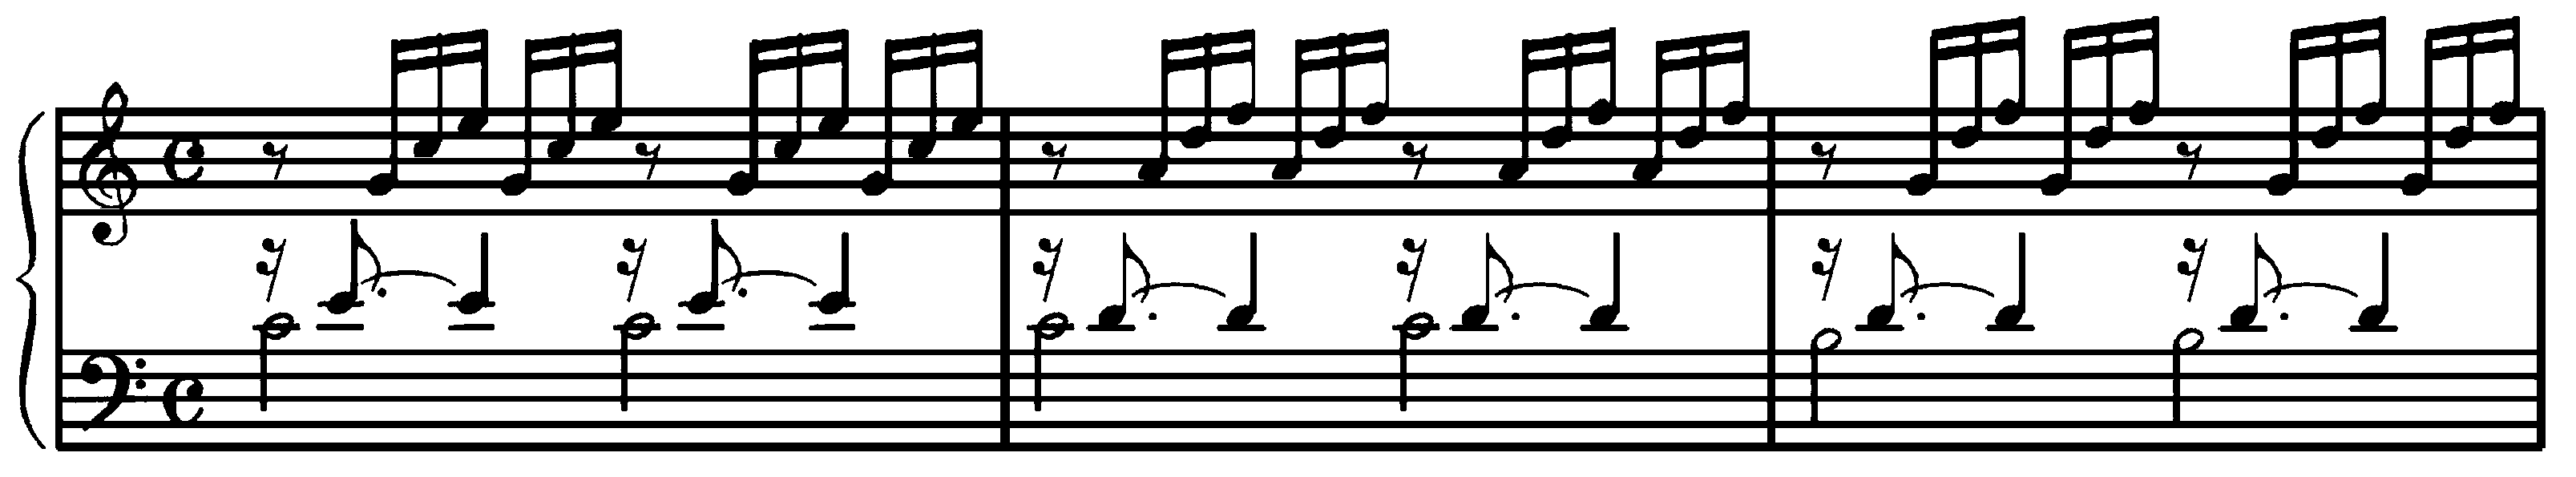 BWV 846